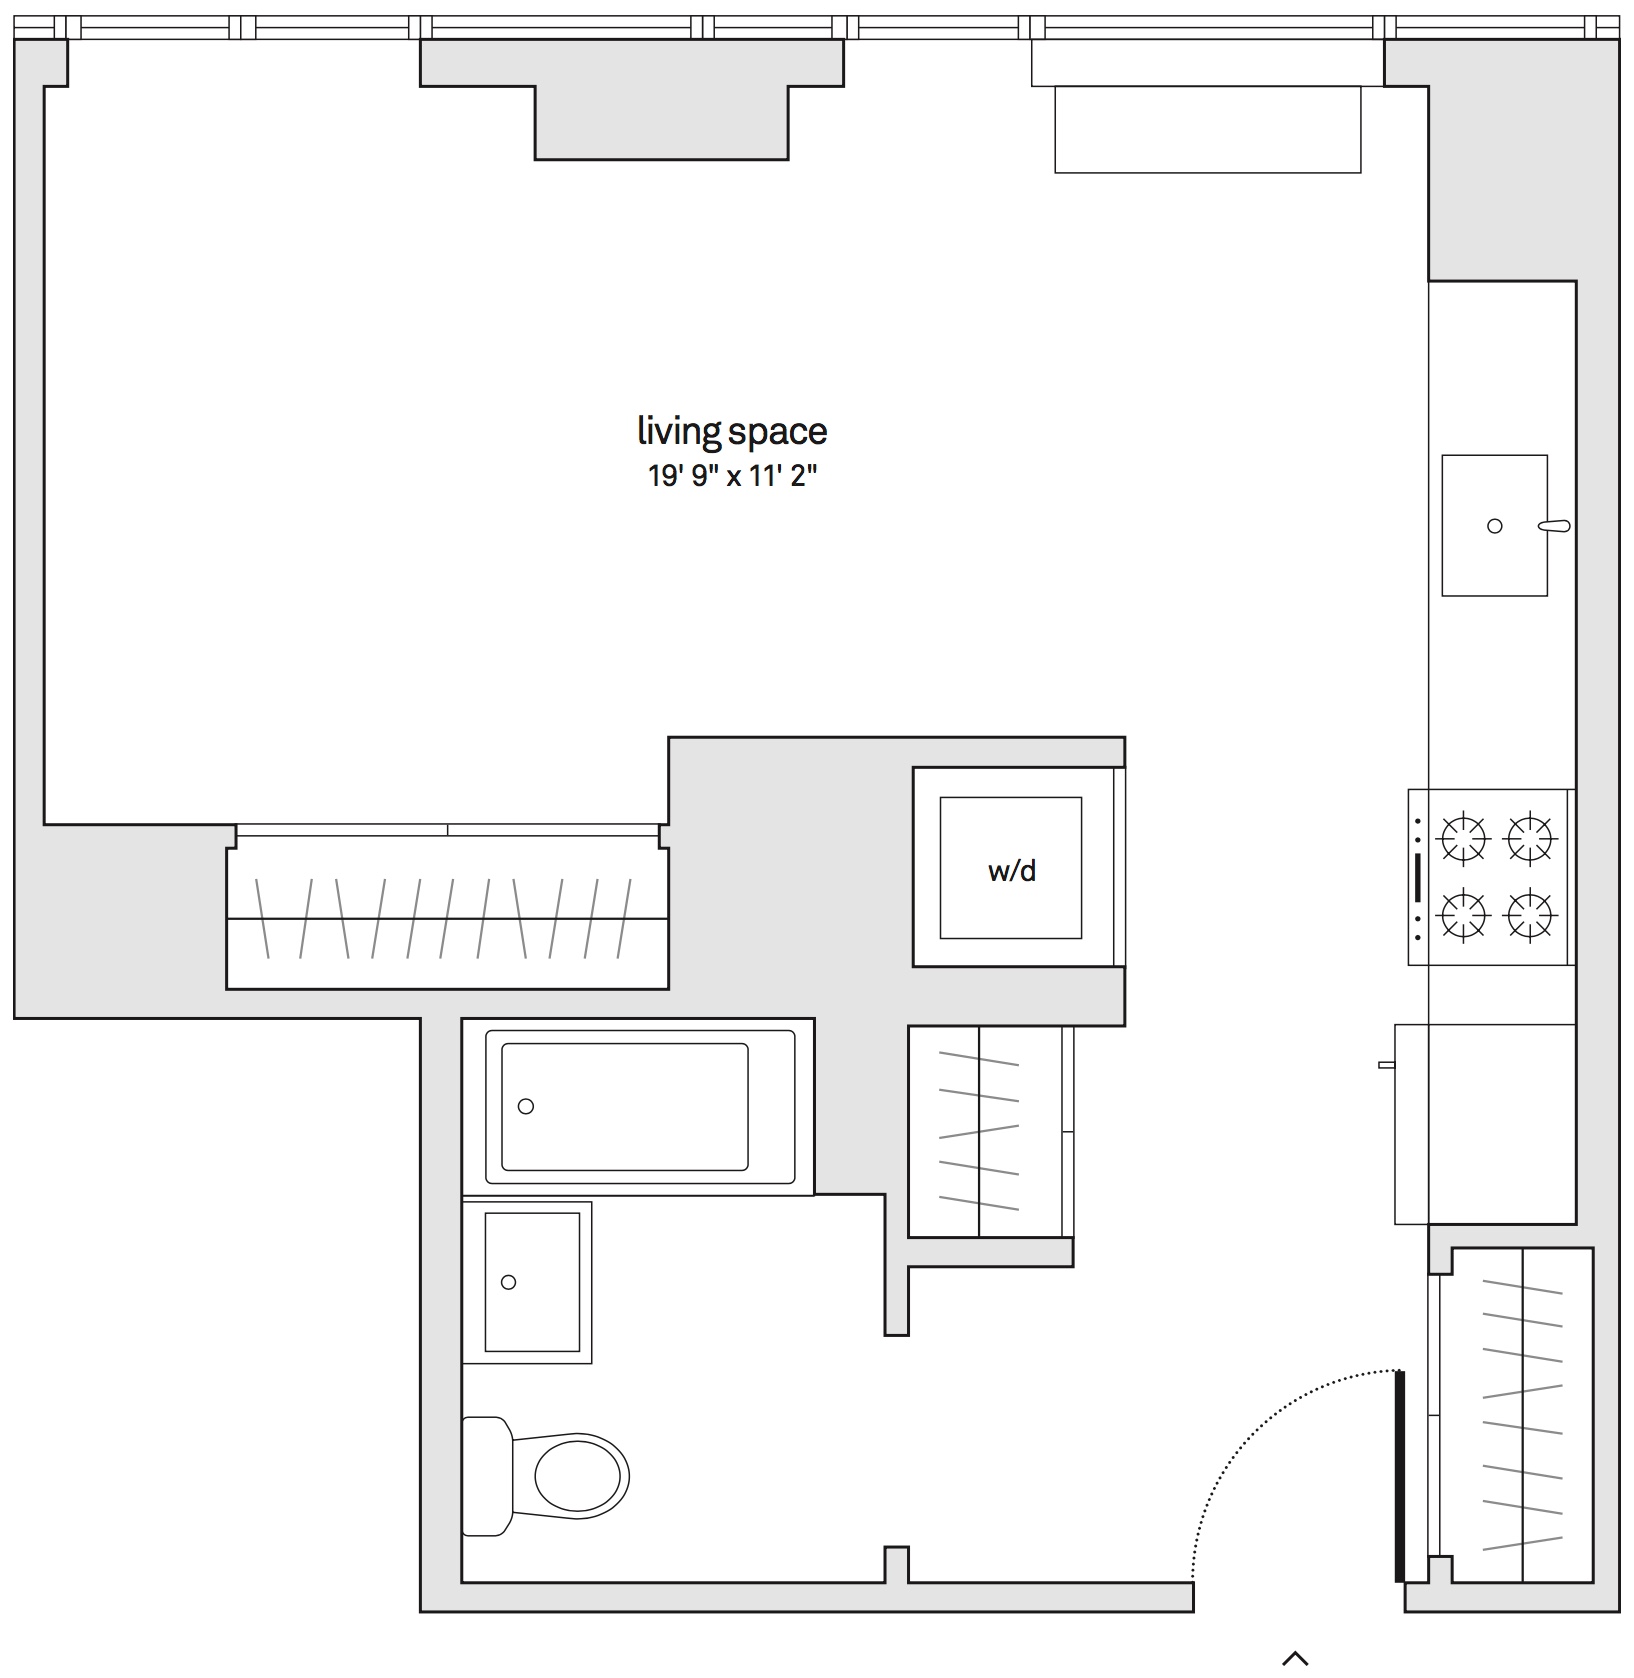 Floorplan of unit 47H.